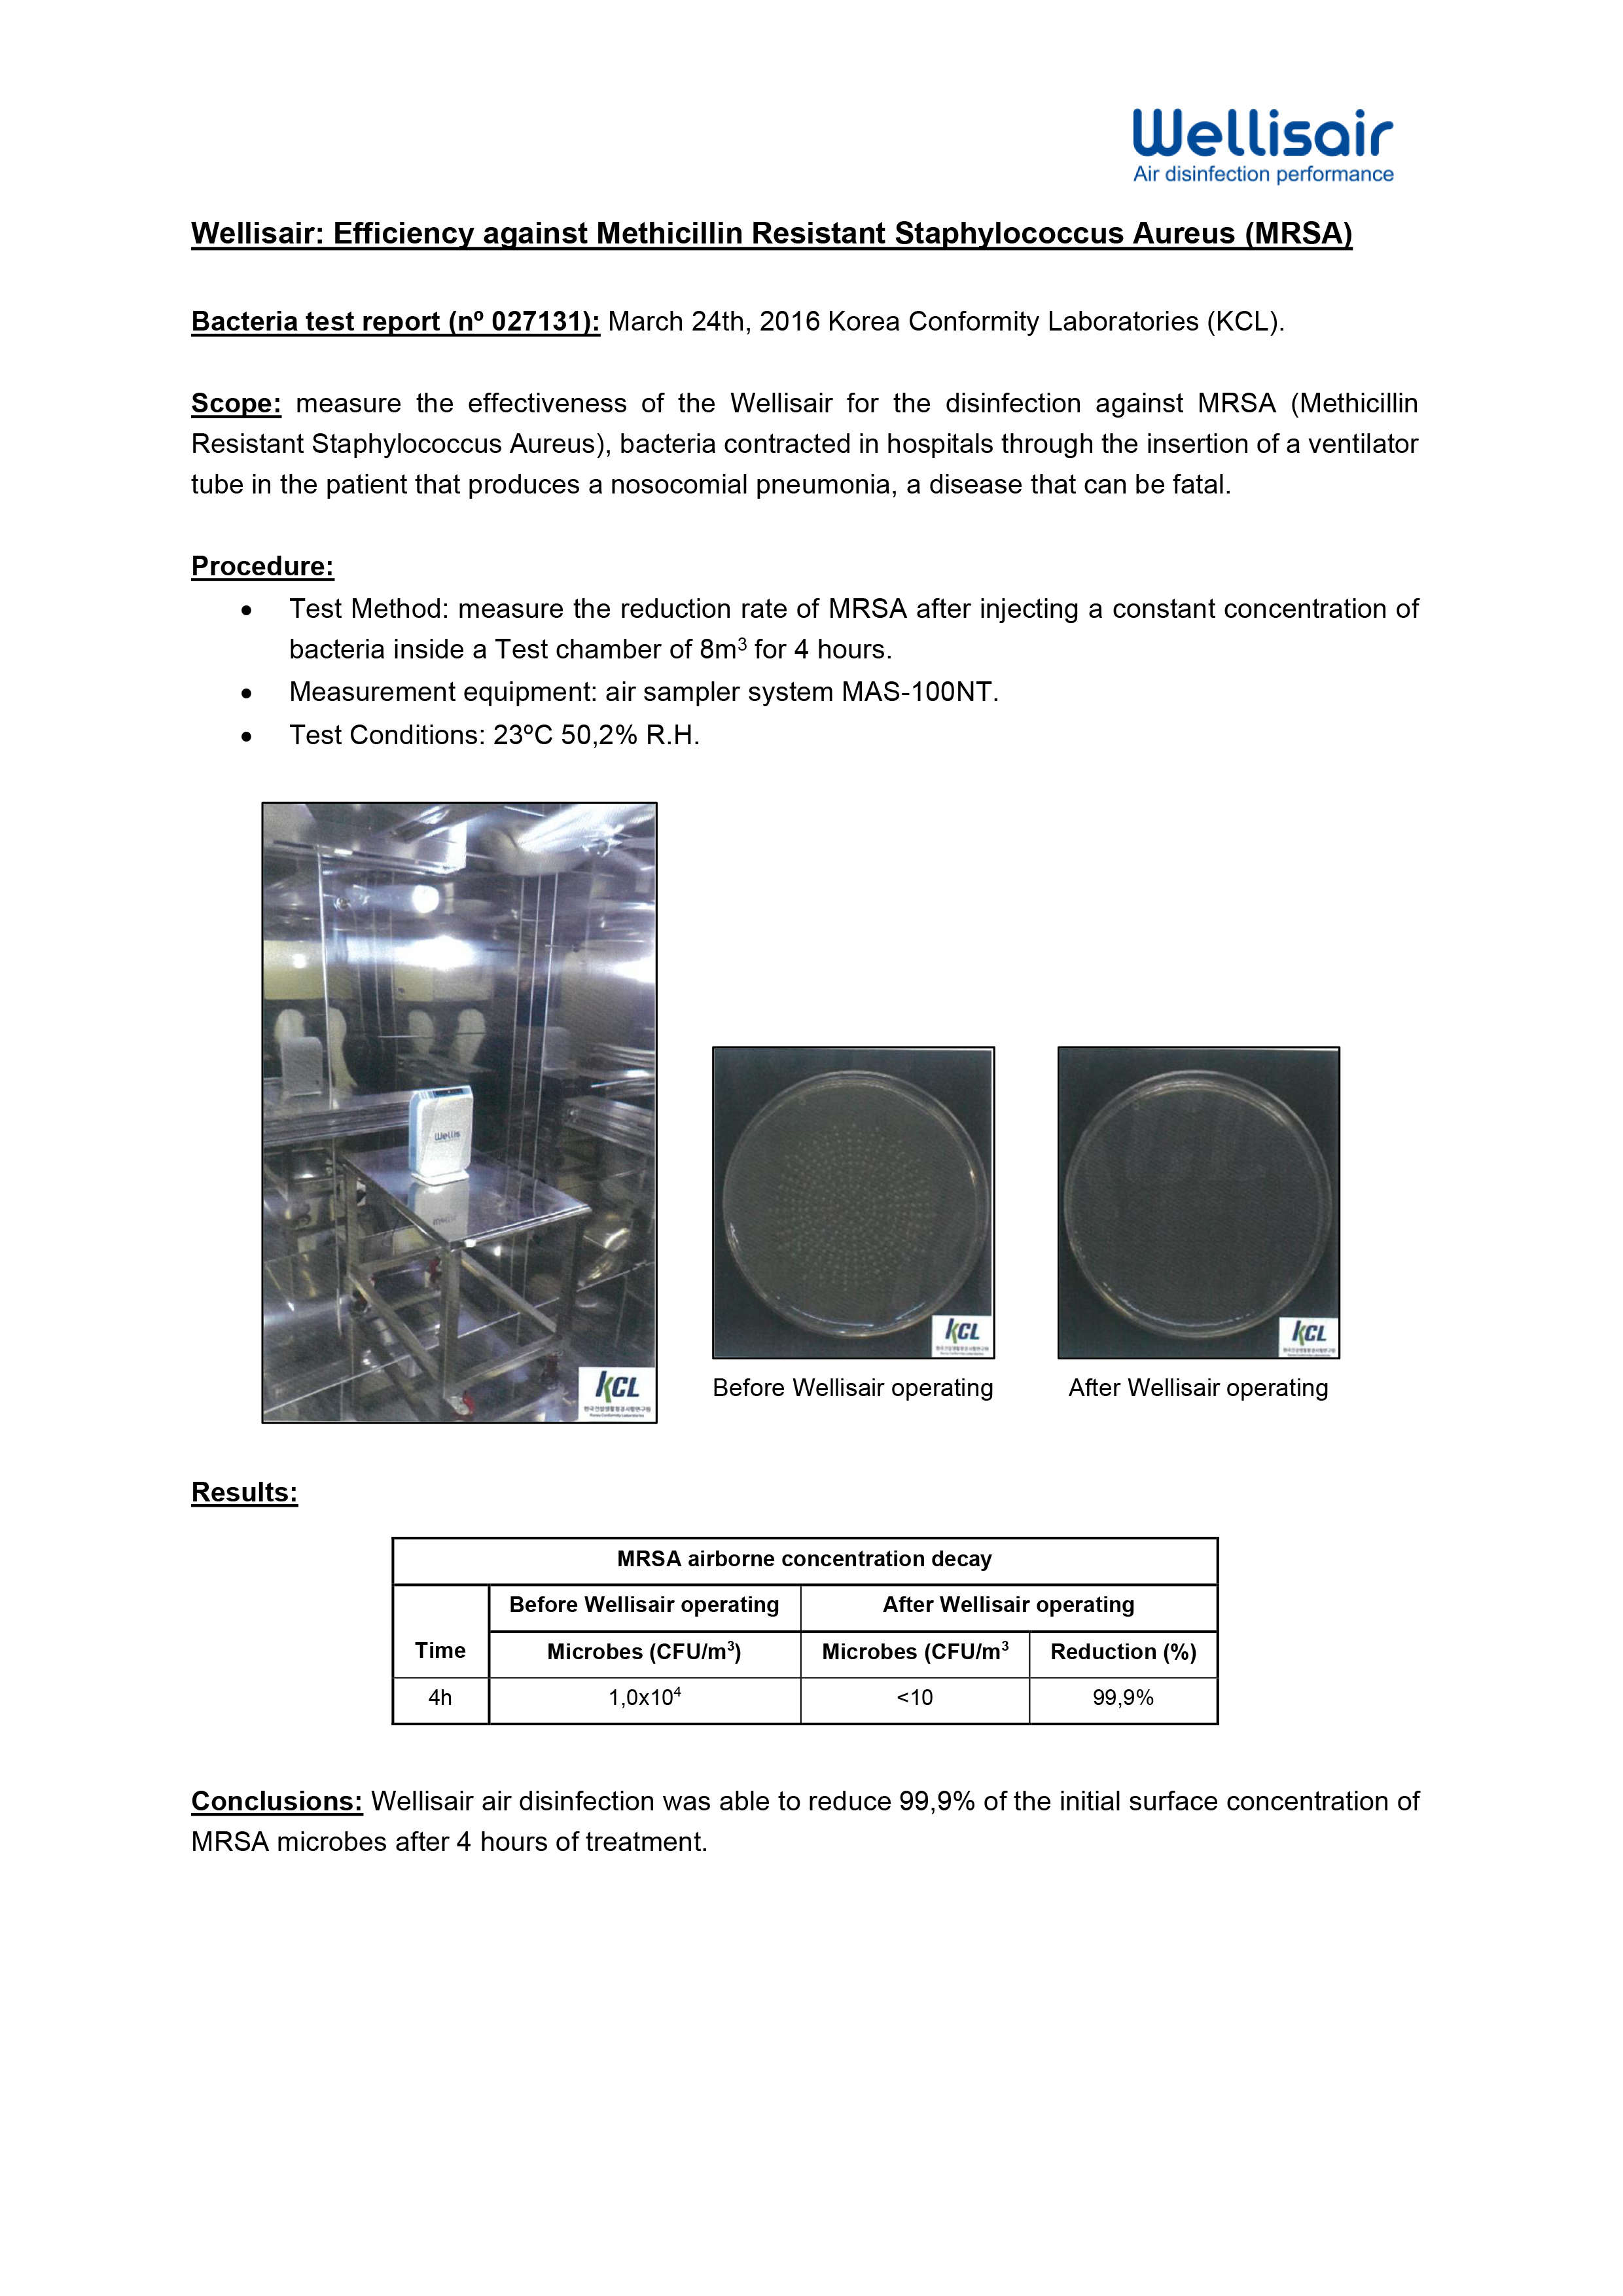 Efficiency against Methicillin Resistant Staphylococcus Aureus (MRSA) - Test result Korea Conformity Laboratories